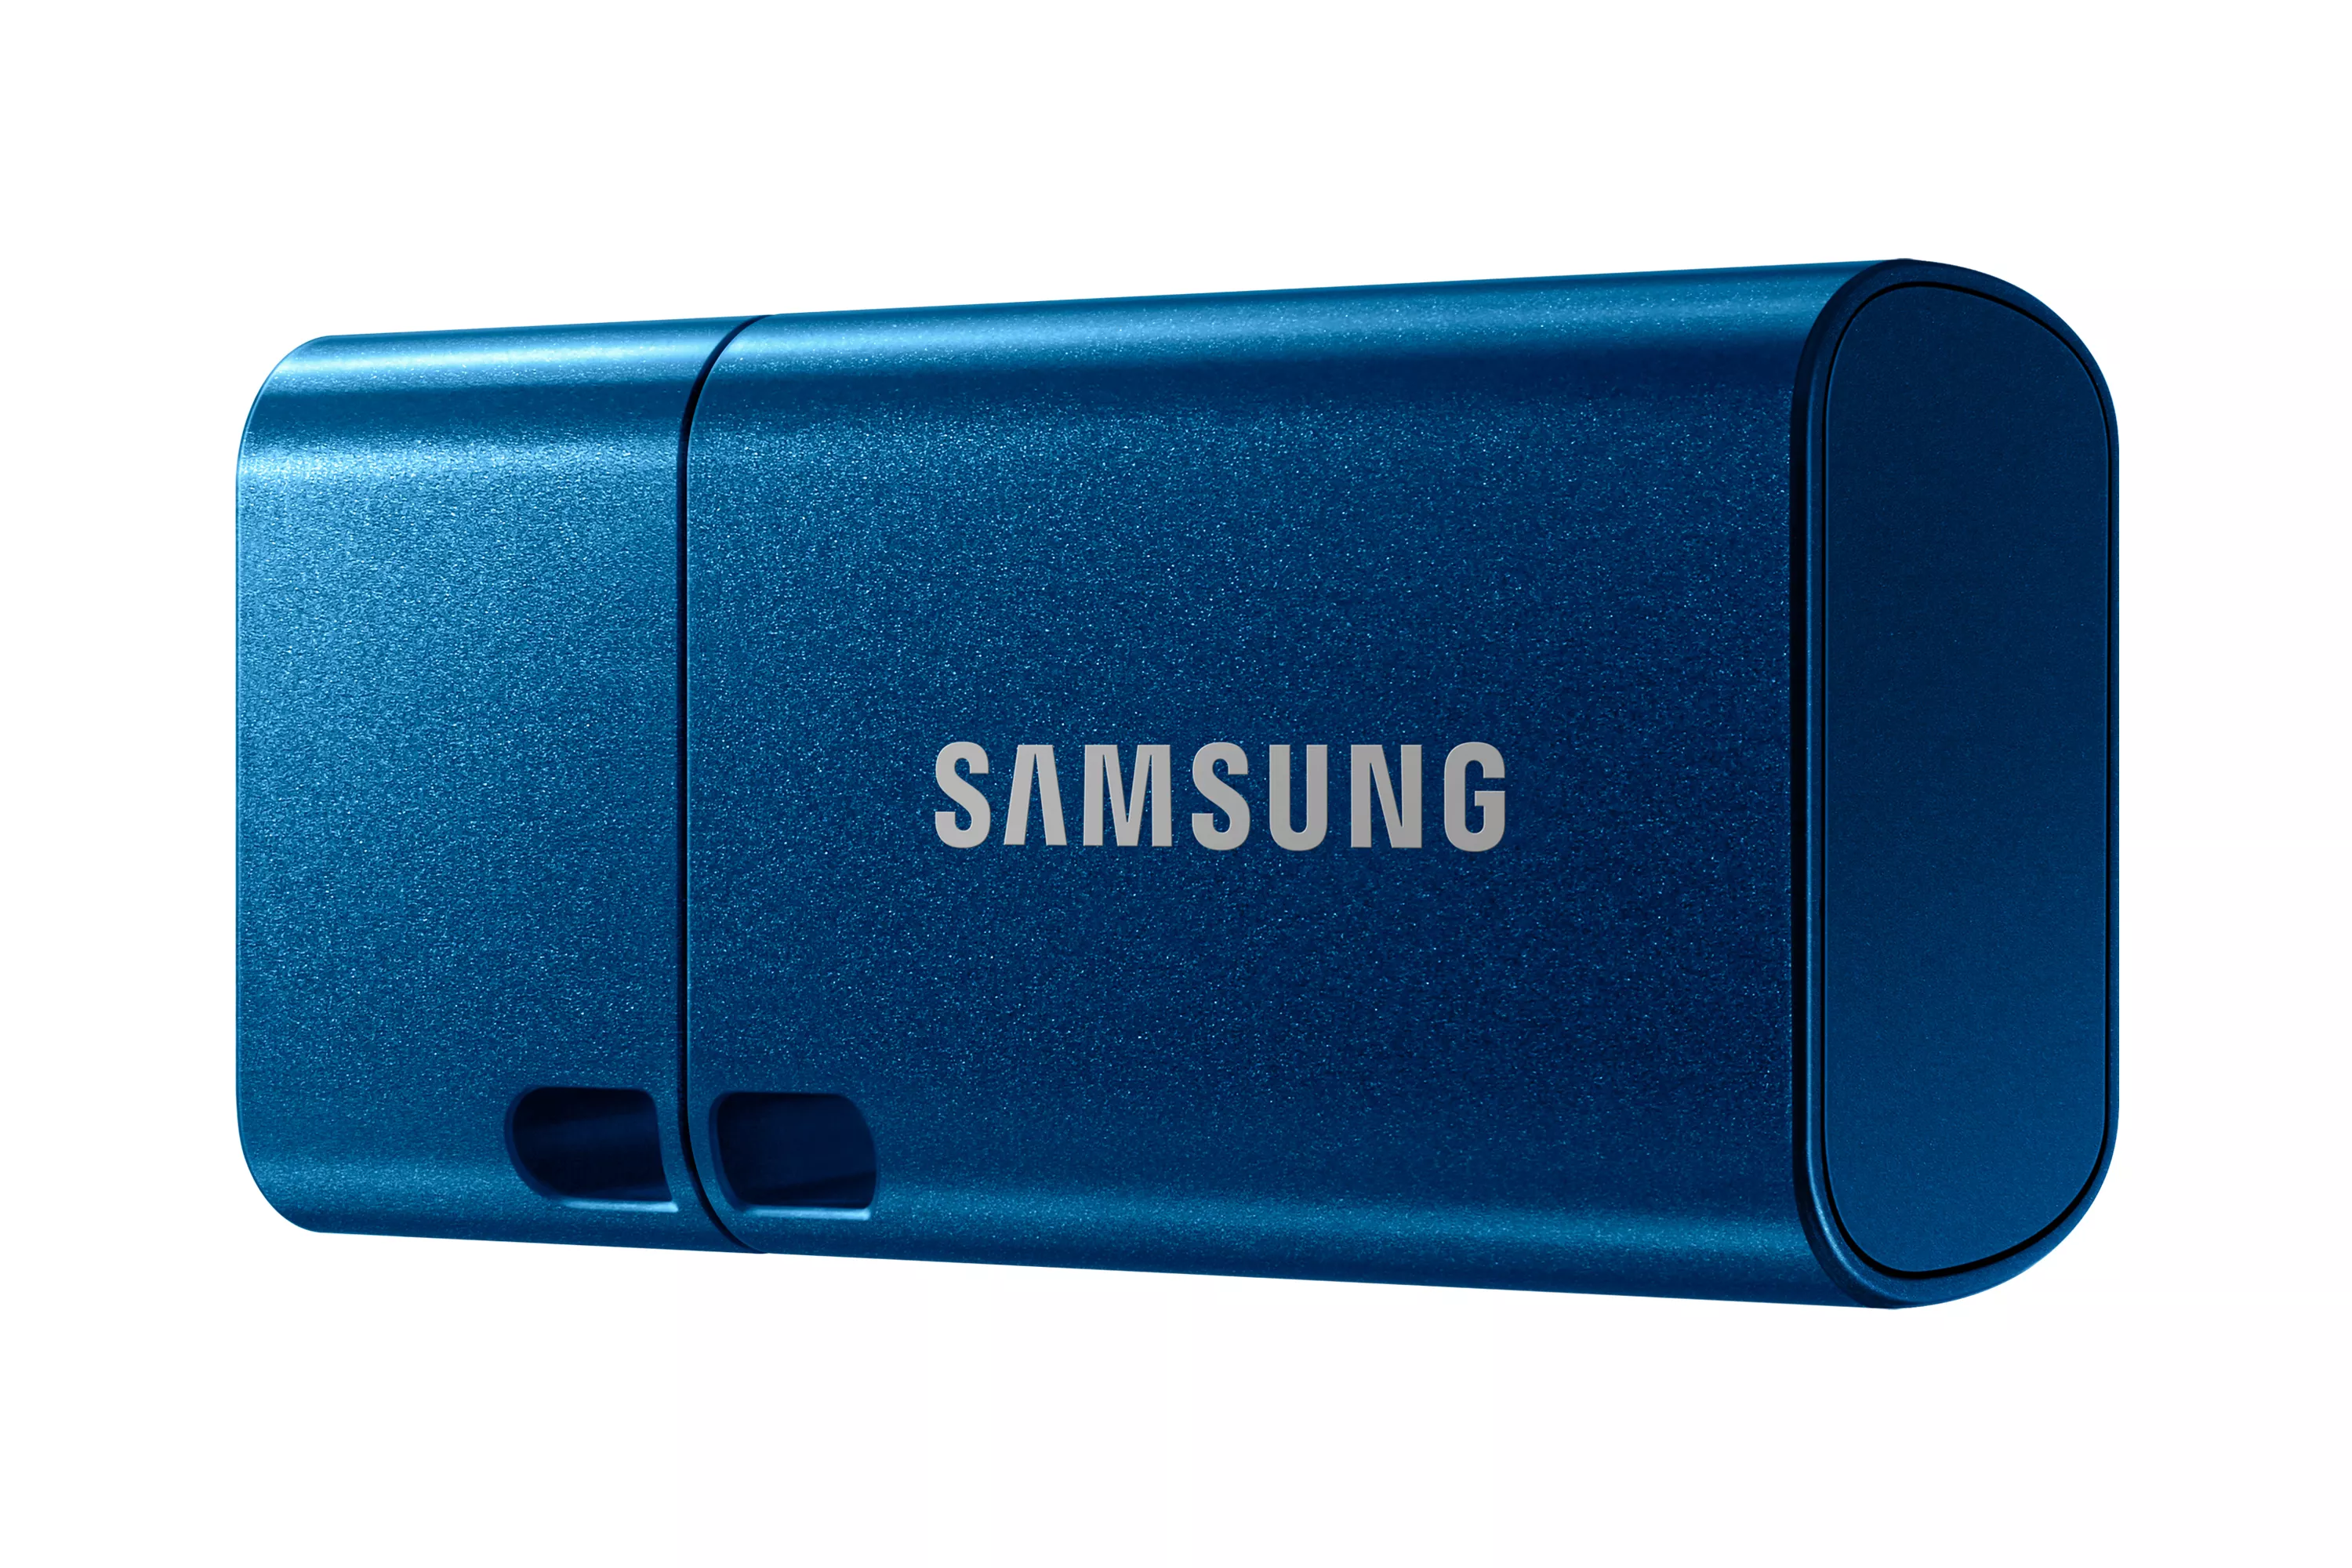 Vente SAMSUNG USB Type-C 256Go 400Mo/s USB 3.1 Flash Samsung au meilleur prix - visuel 2